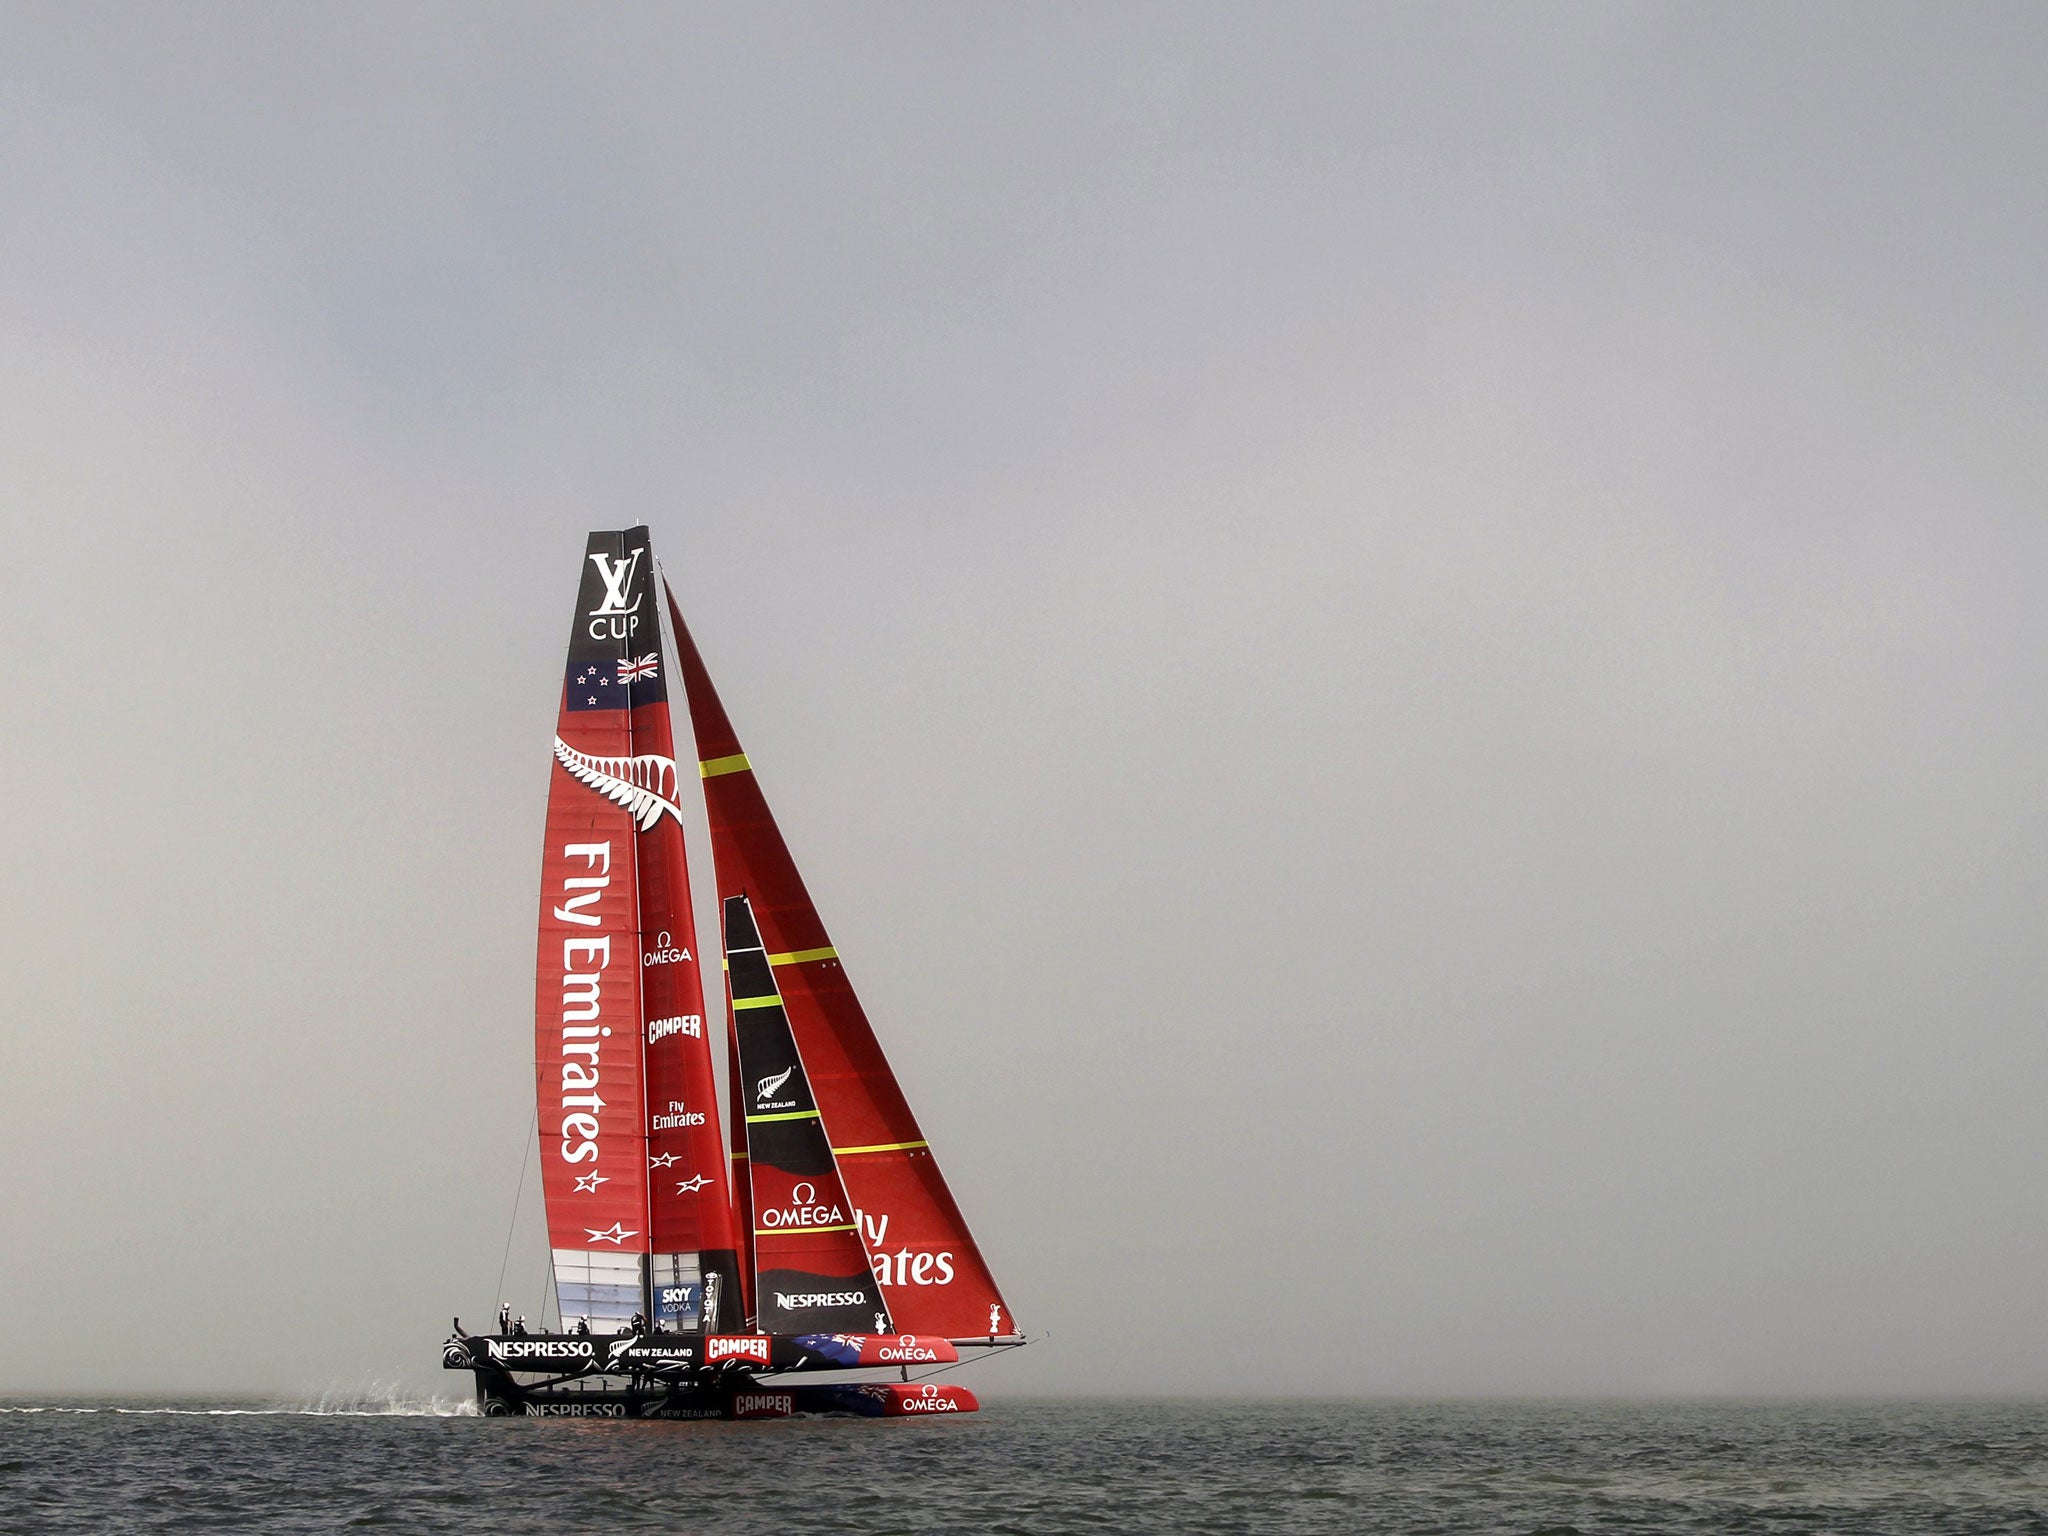 Louis Vuitton Cup- Fastest Louis Vuitton Cup Race ever sailed + Videos